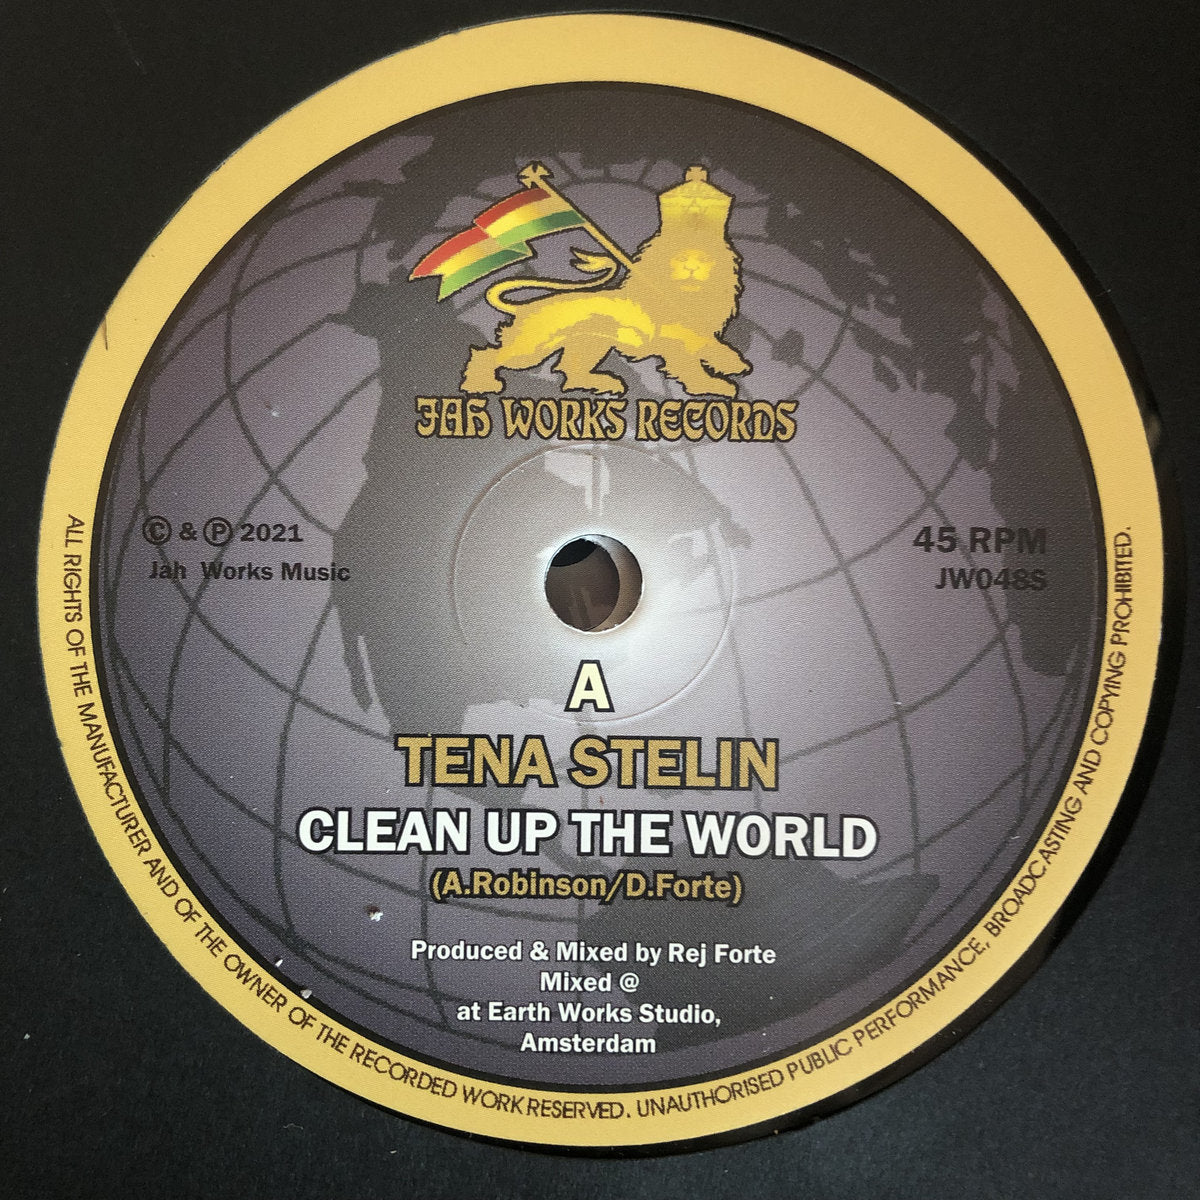 TENA STELIN 'CLEAN UP THE WORLD' 7"